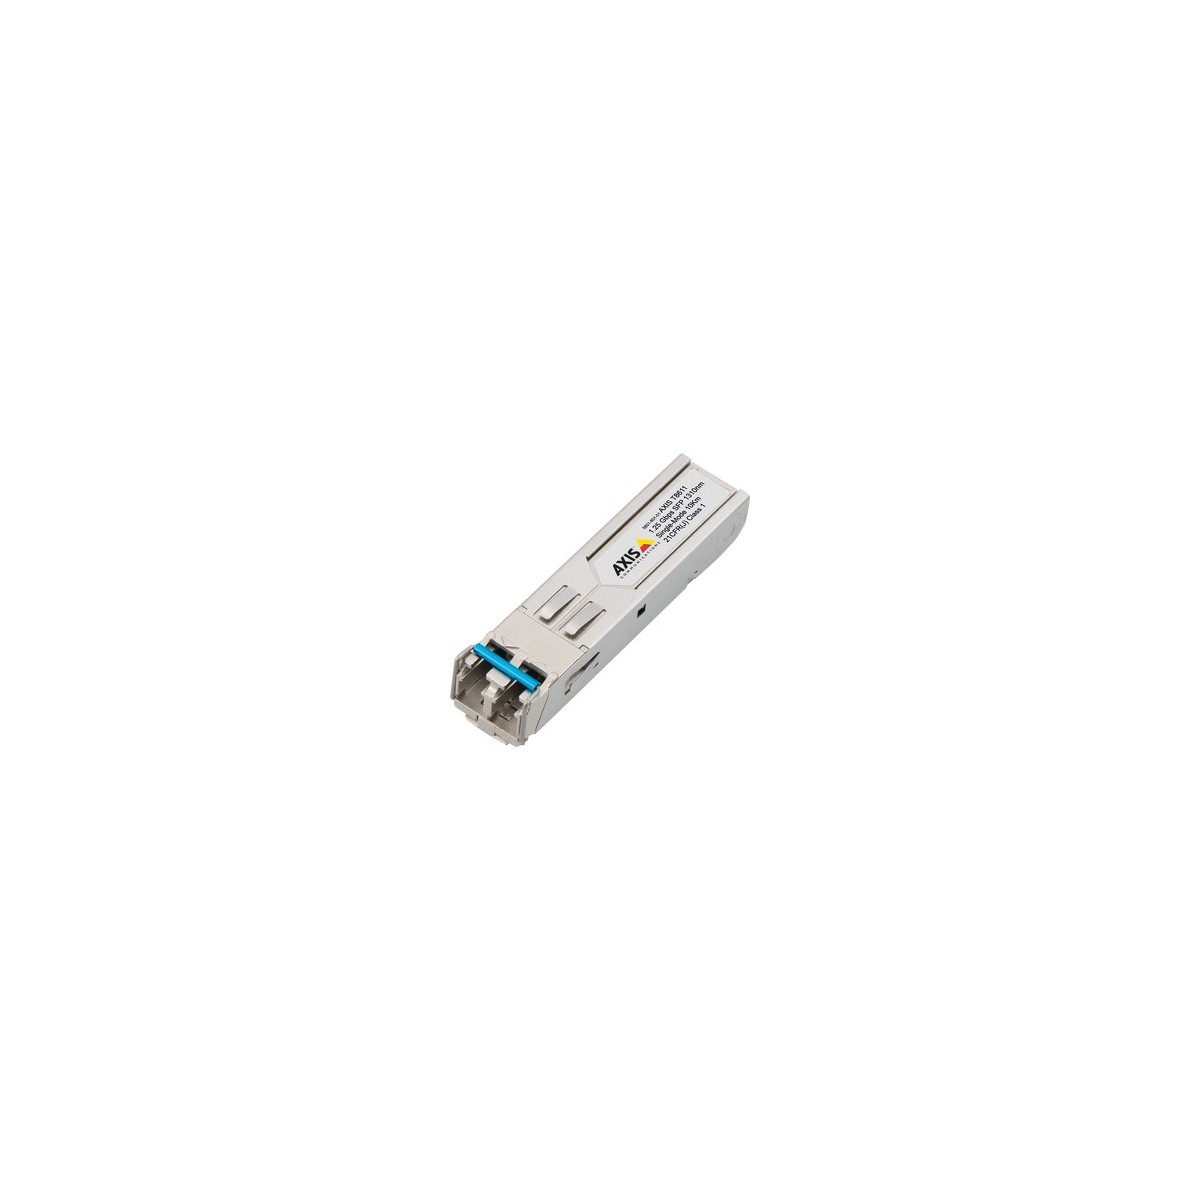 Axis T8611 - Fiber optic - SFP - LC - LX - 10000 m - 1310 nm